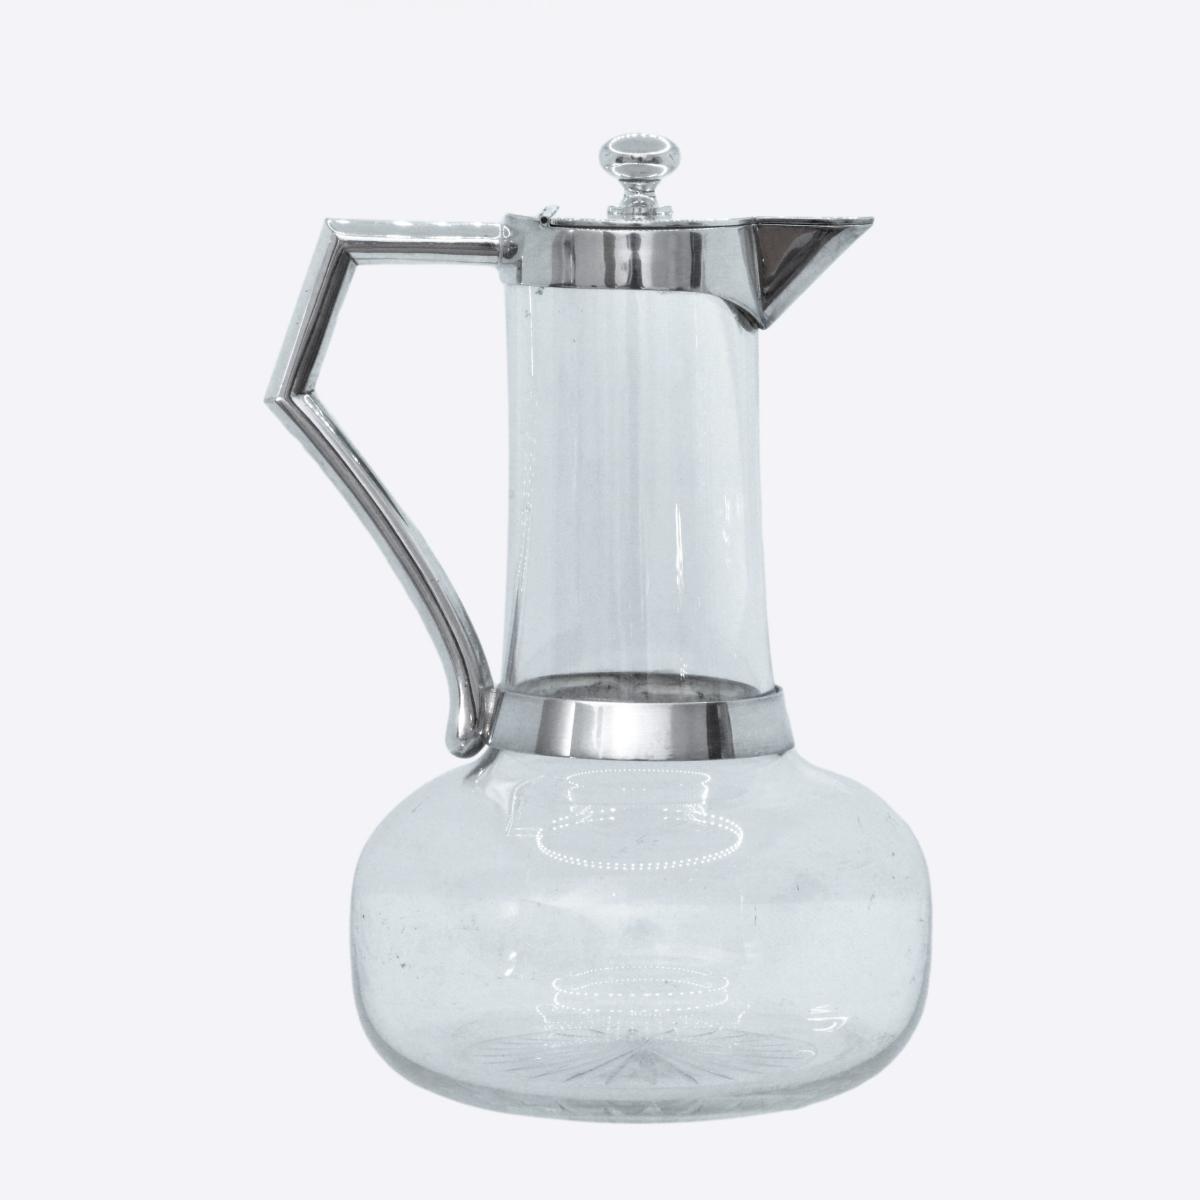 Christopher Dresser silver plate claret jug for Hukin and Heath